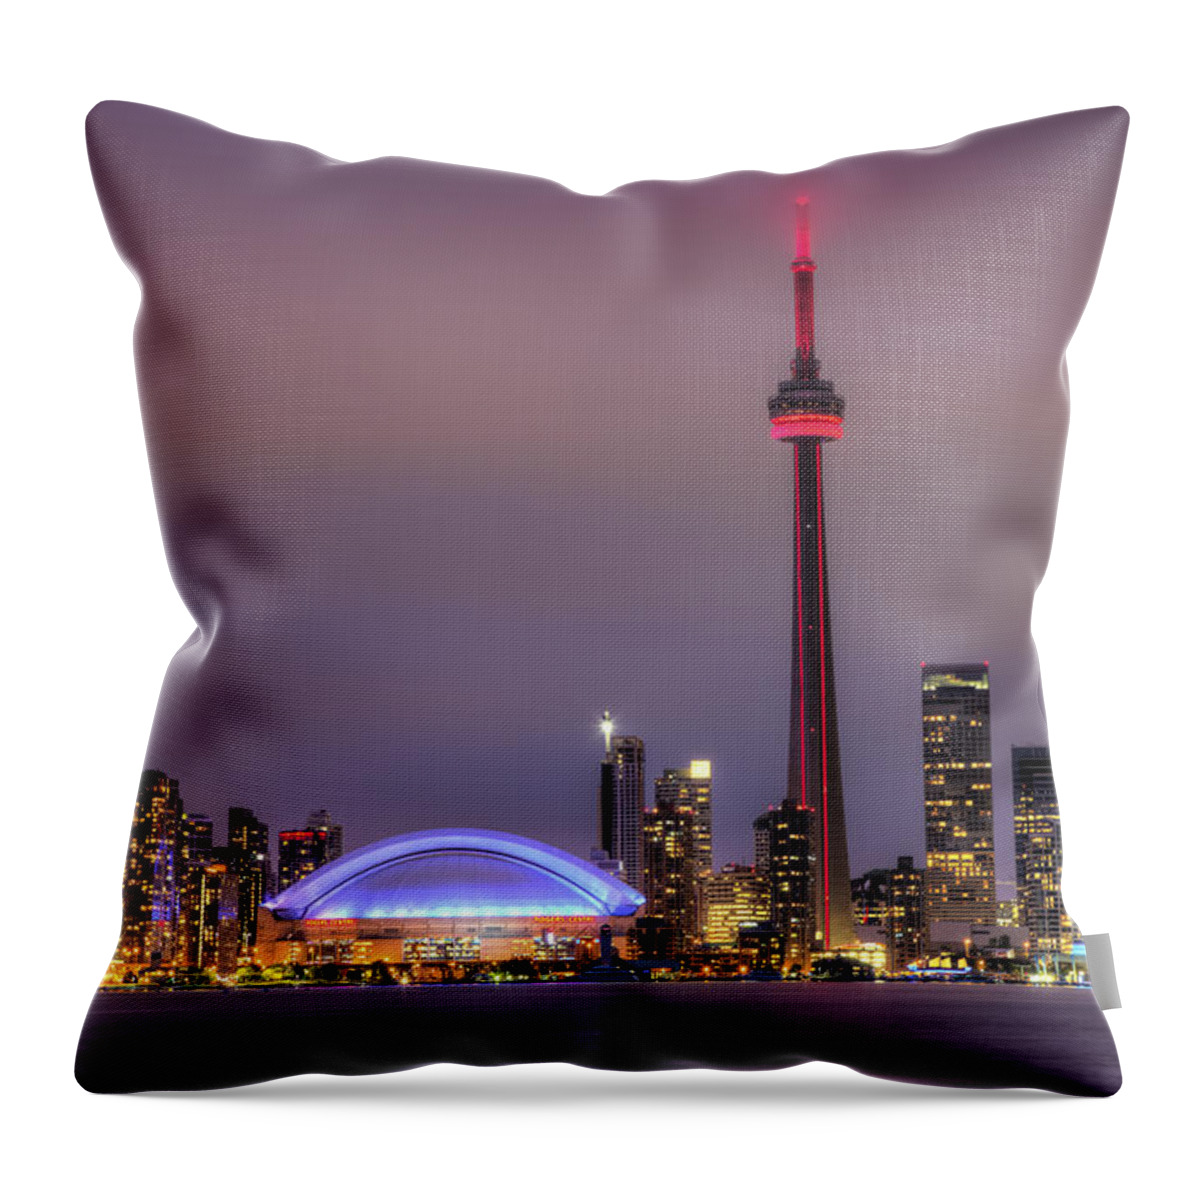 Toronto Skyline Throw Pillow featuring the photograph Toronto Skyline by Shawn Everhart